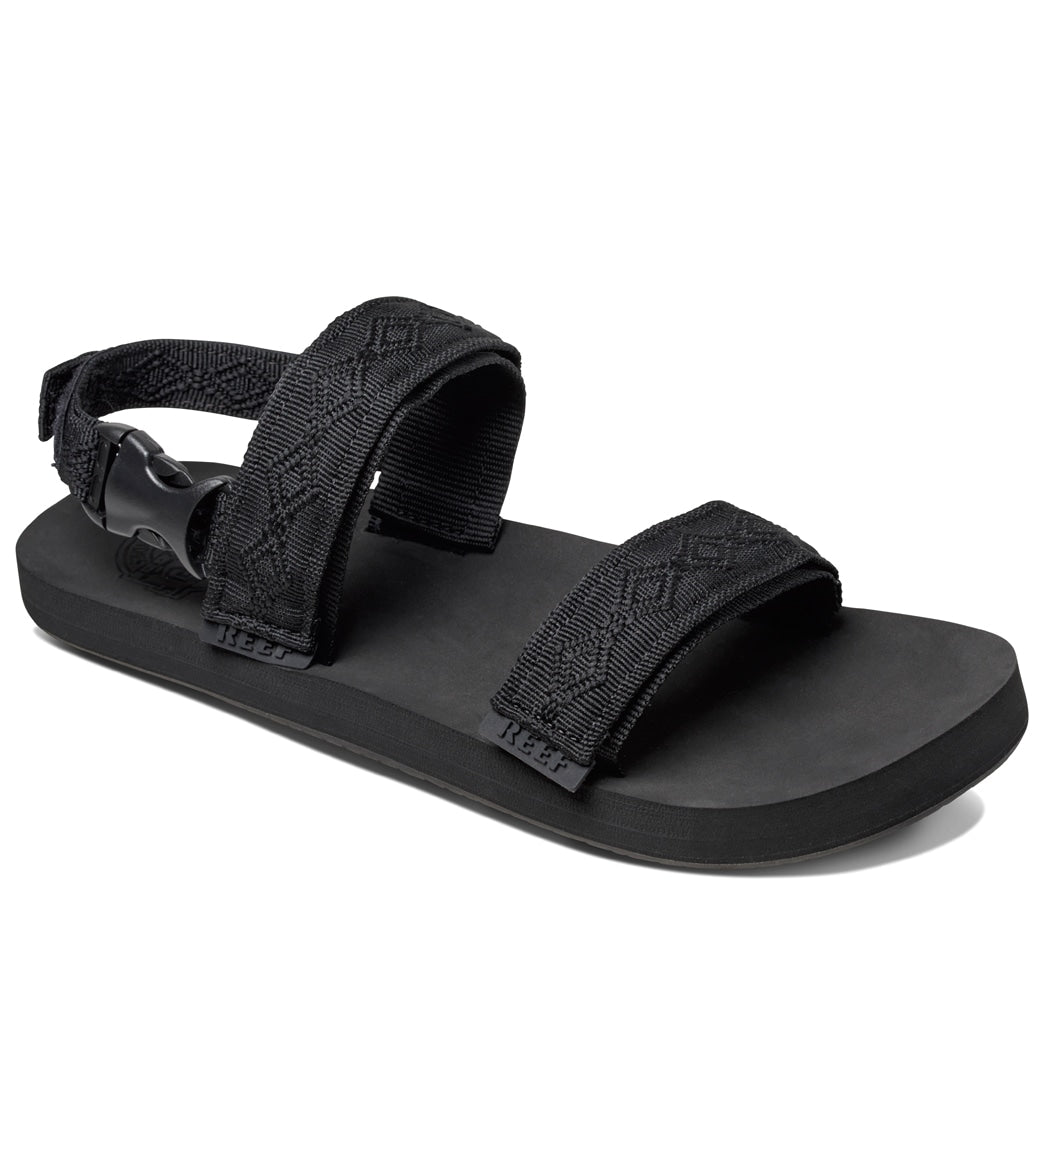 Reef Men's Convertible Sandal - Black 11 - Swimoutlet.com